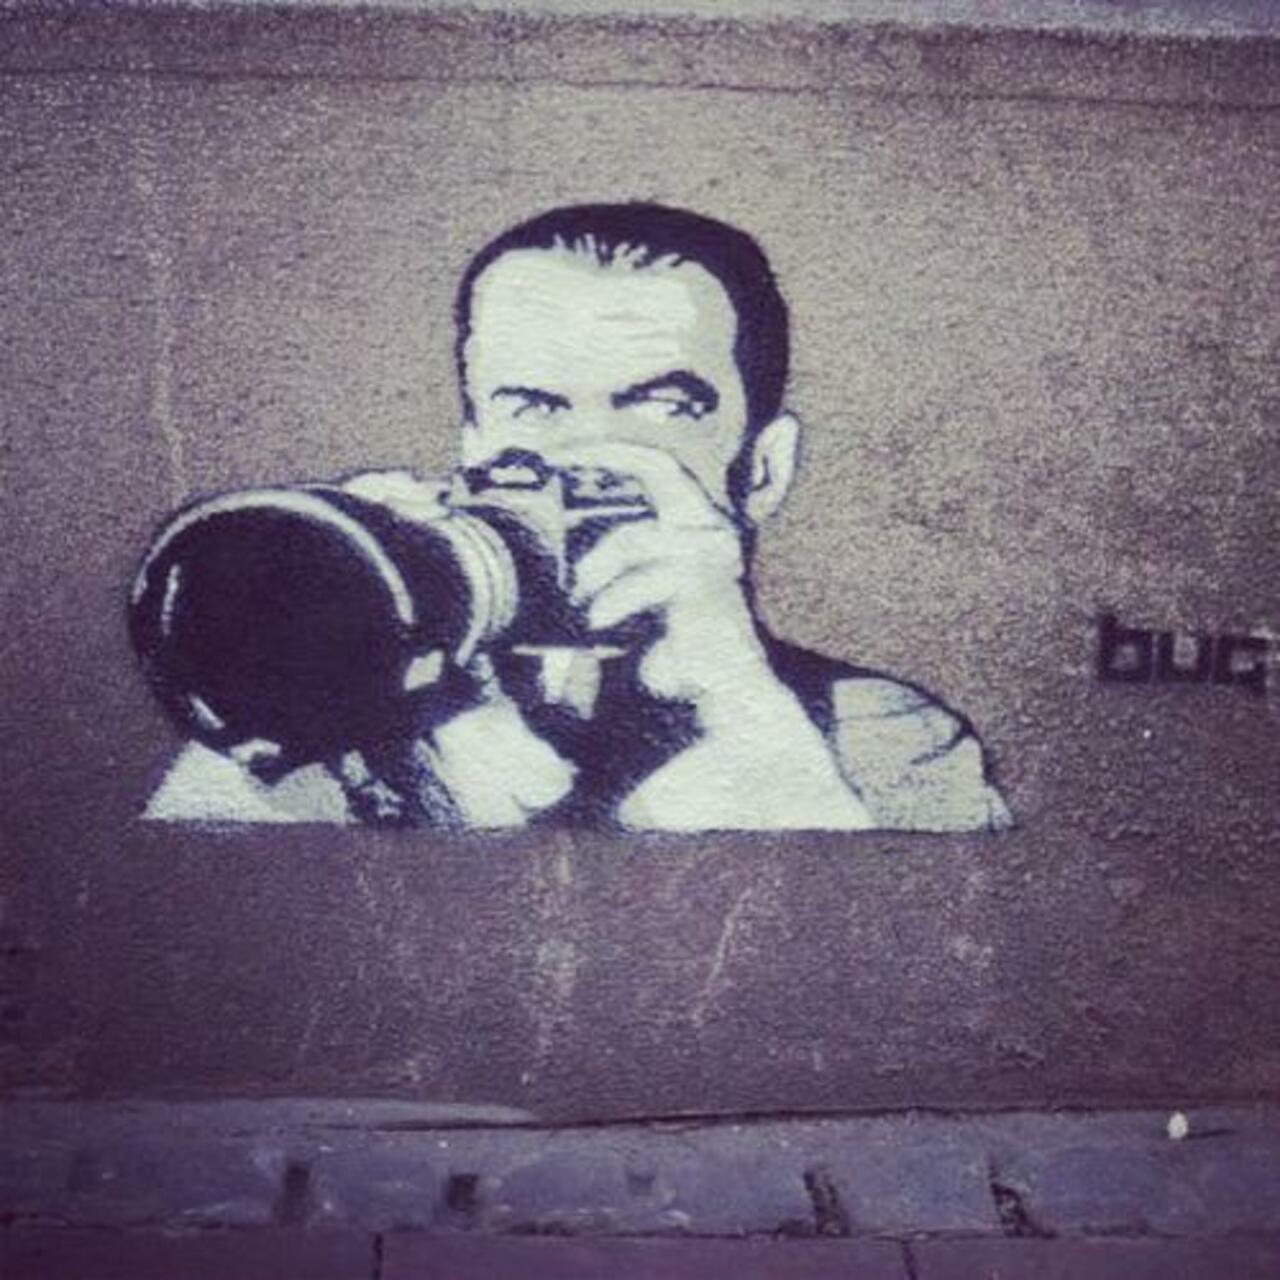 ##Streetart ##Sprayart ##Stencil ##Graffiti ... - #Mural - #ZangArt #Showcase - http://bit.ly/1BUy7Pw http://t.co/D7gzh9OUTy